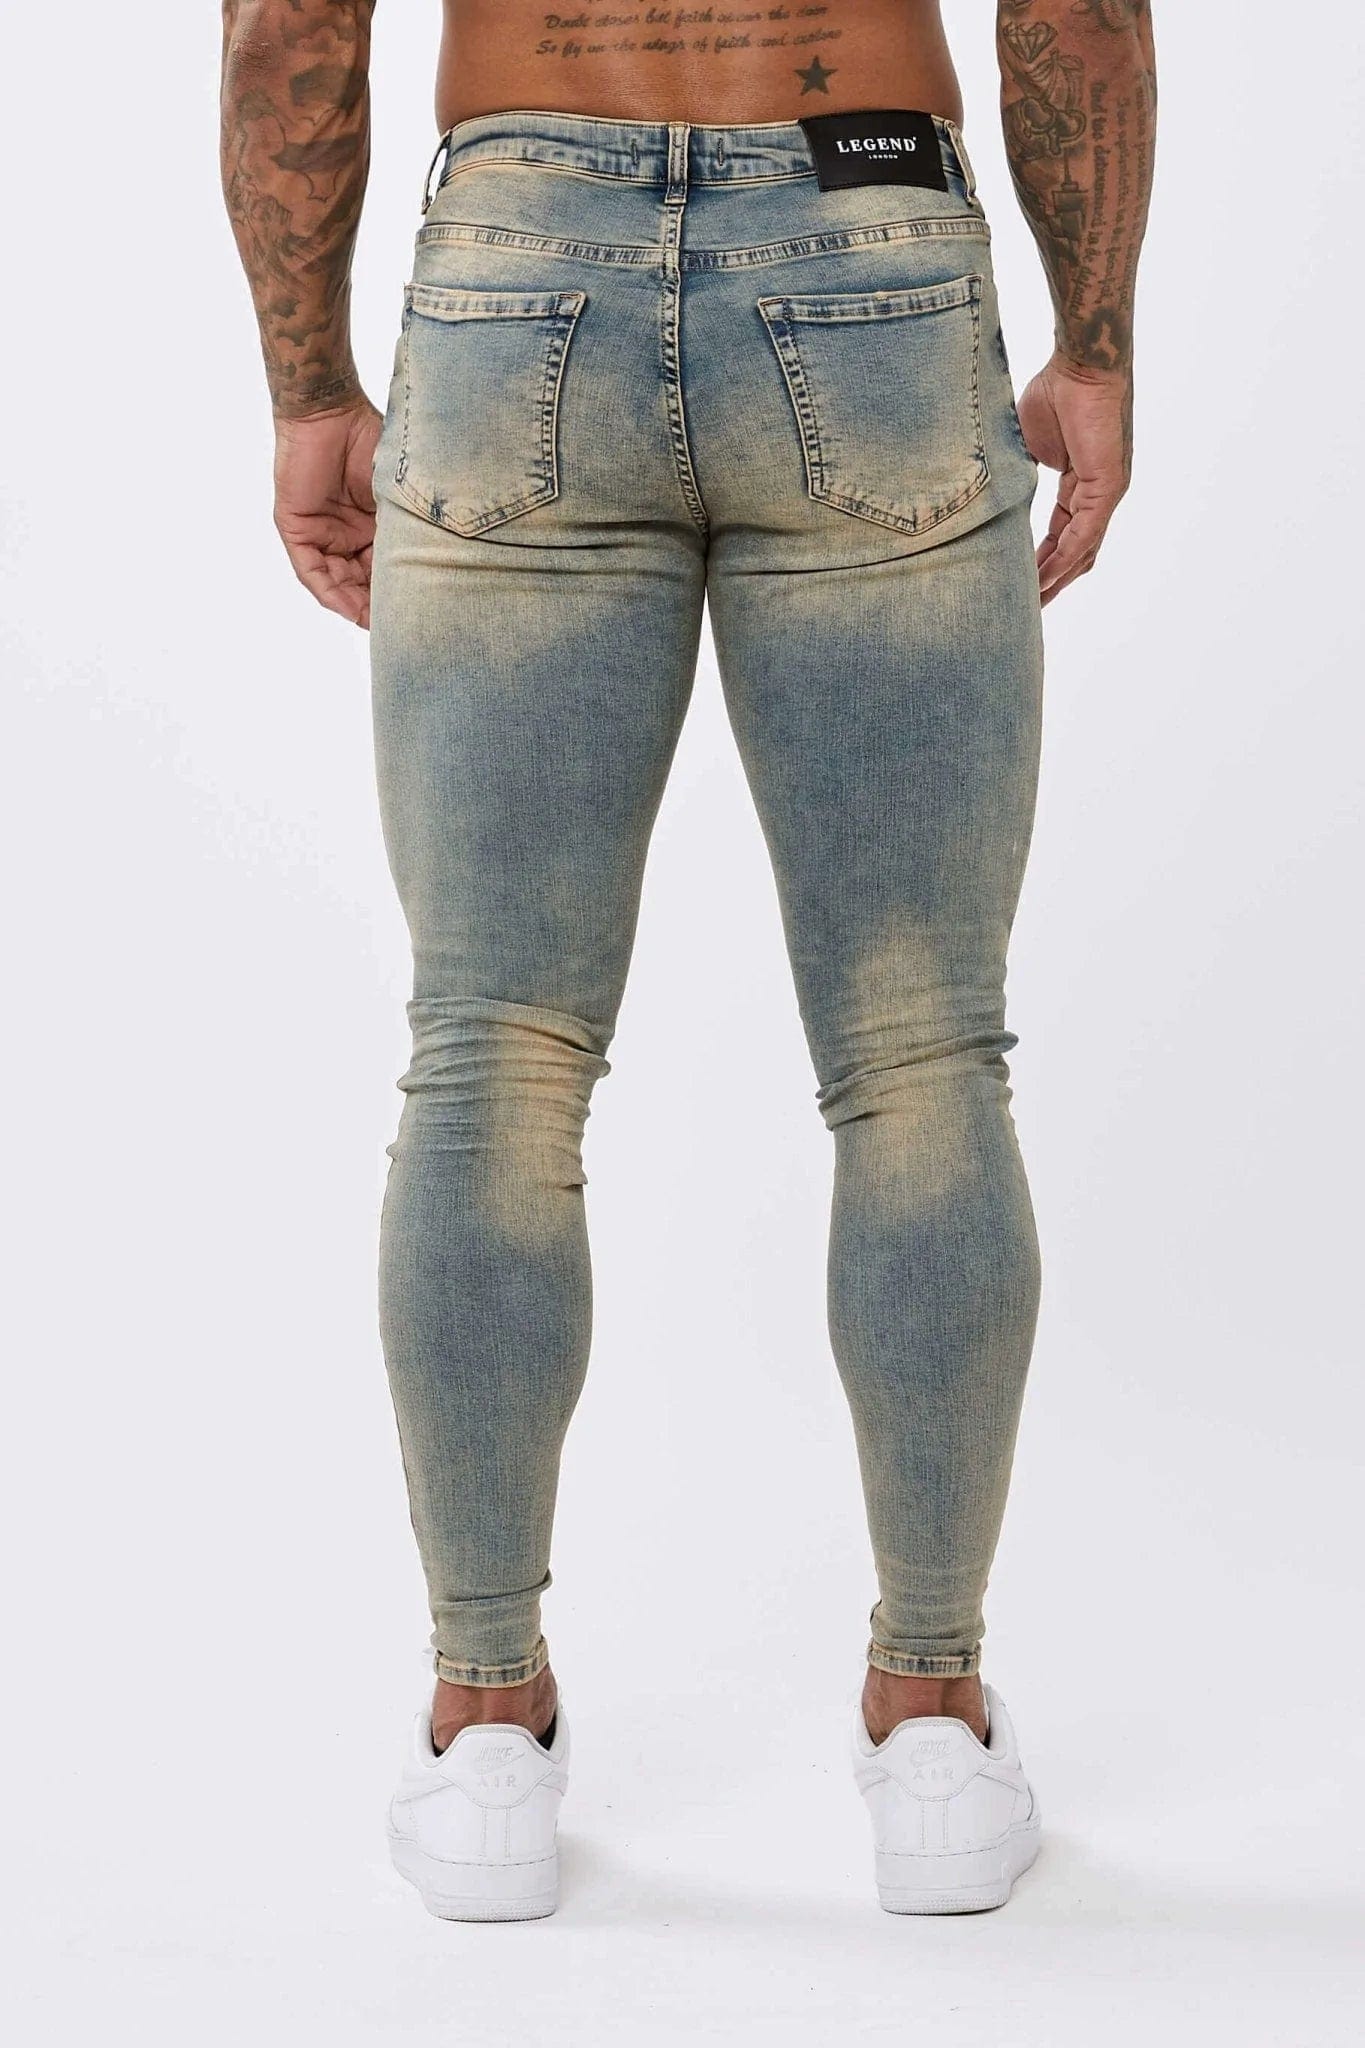 Legend London Jeans HEAVY STONE WASH - SPRAY ON JEANS